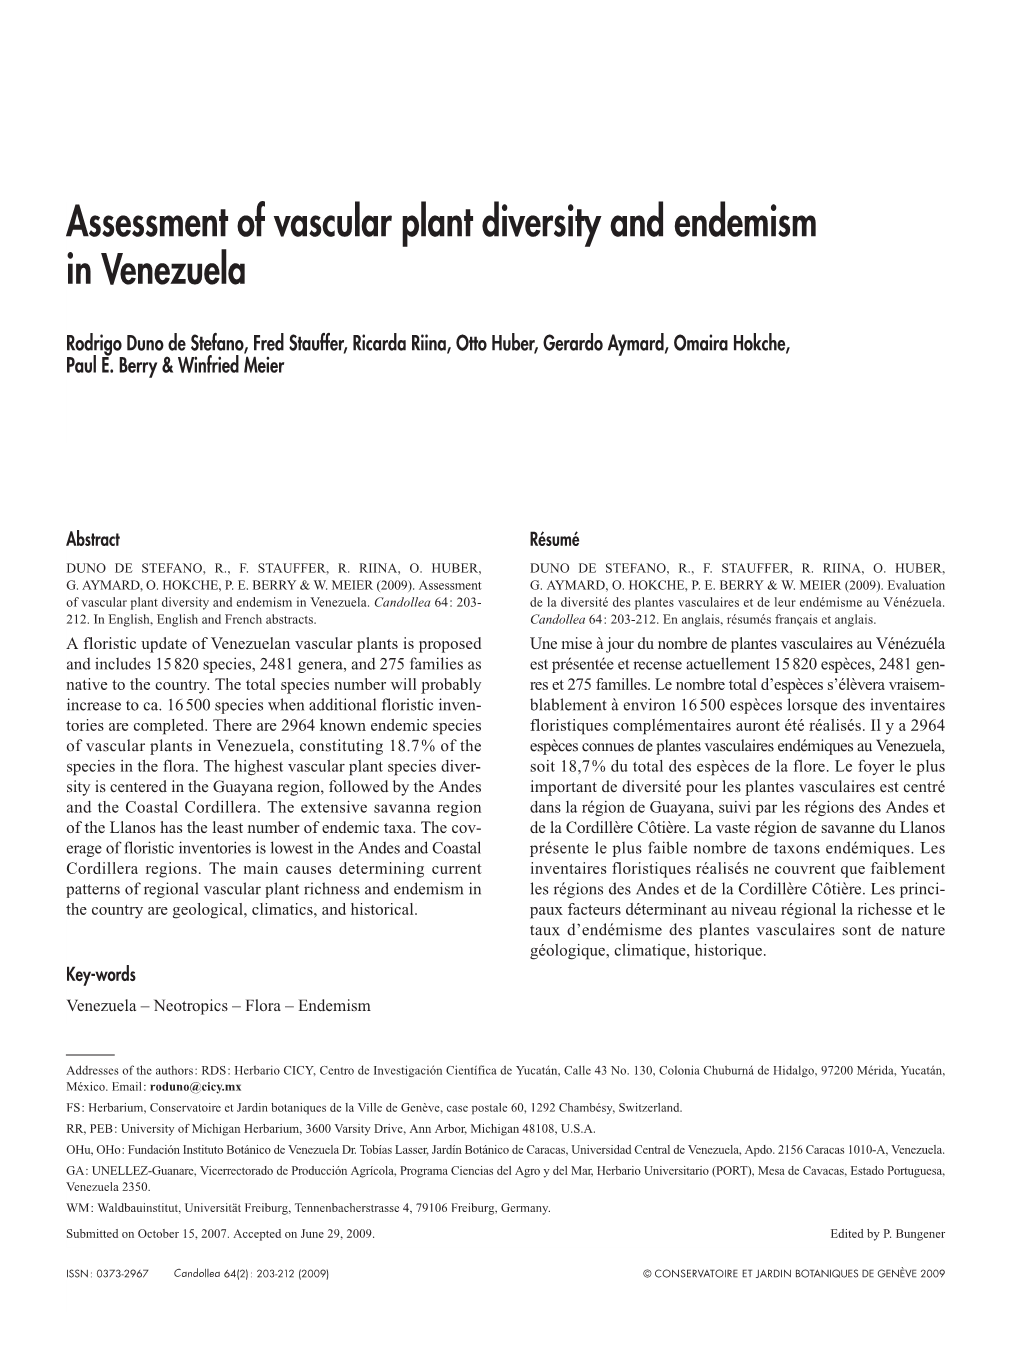 Assessment of Vascular Plant Diversity and Endemism in Venezuela